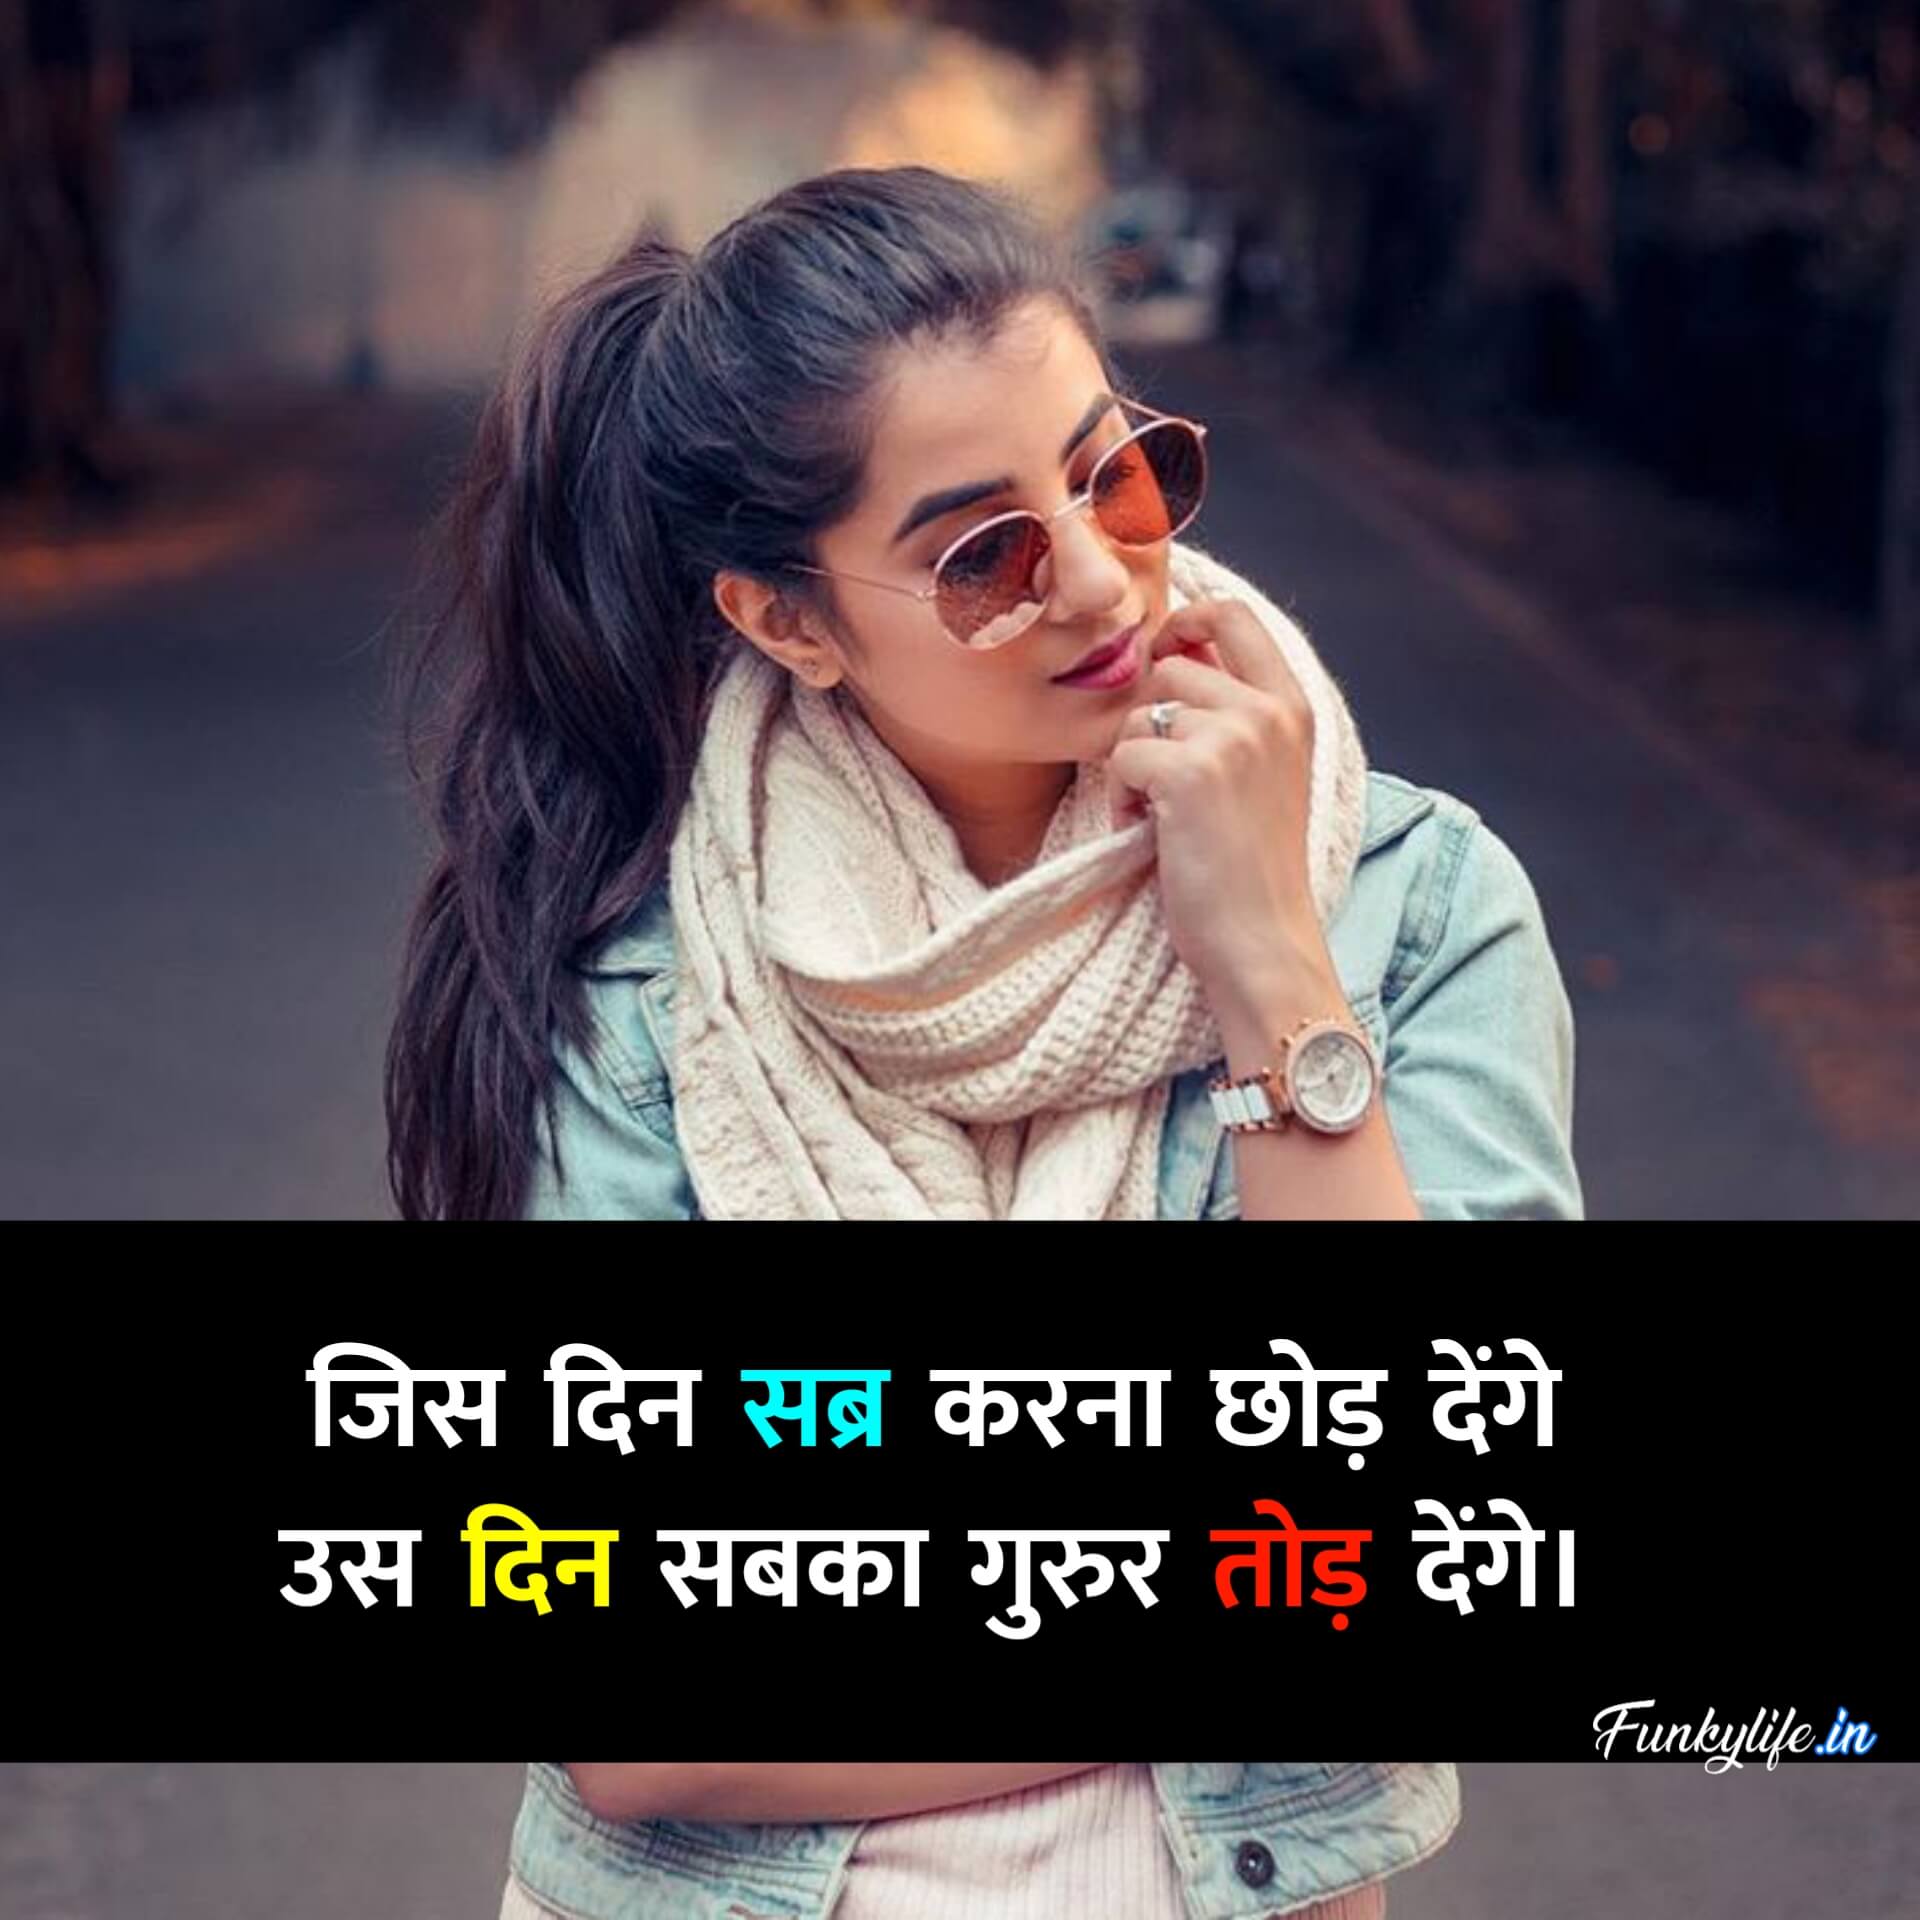 Attitude Status in Hindi For Girls